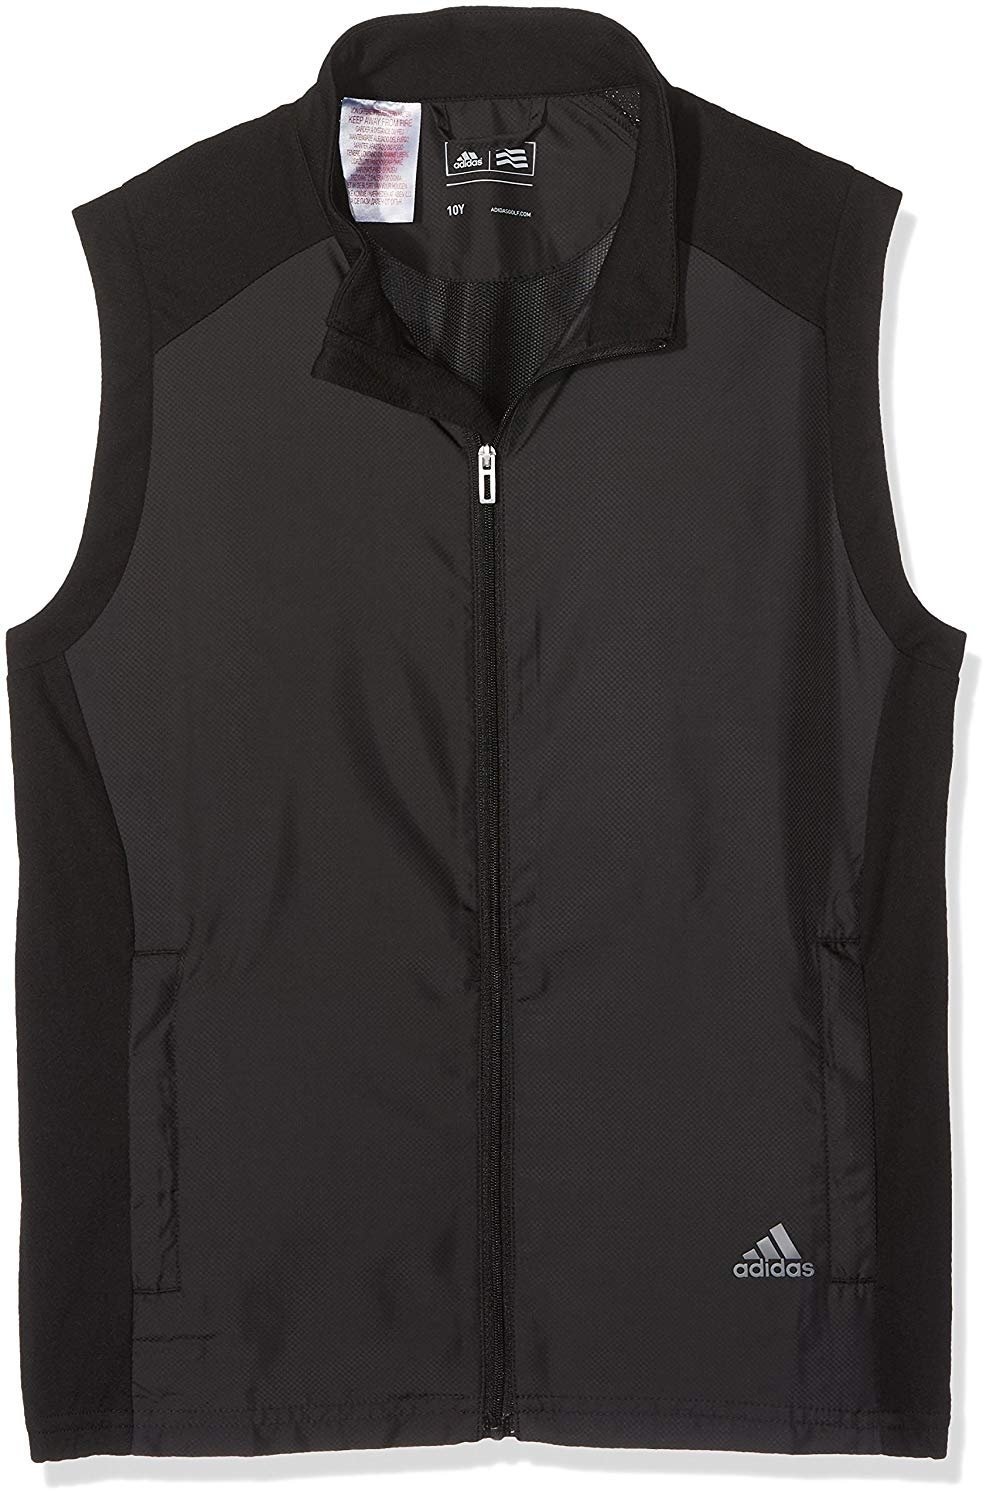 Mellény Adidas Performance Junior Vest Black 16Y